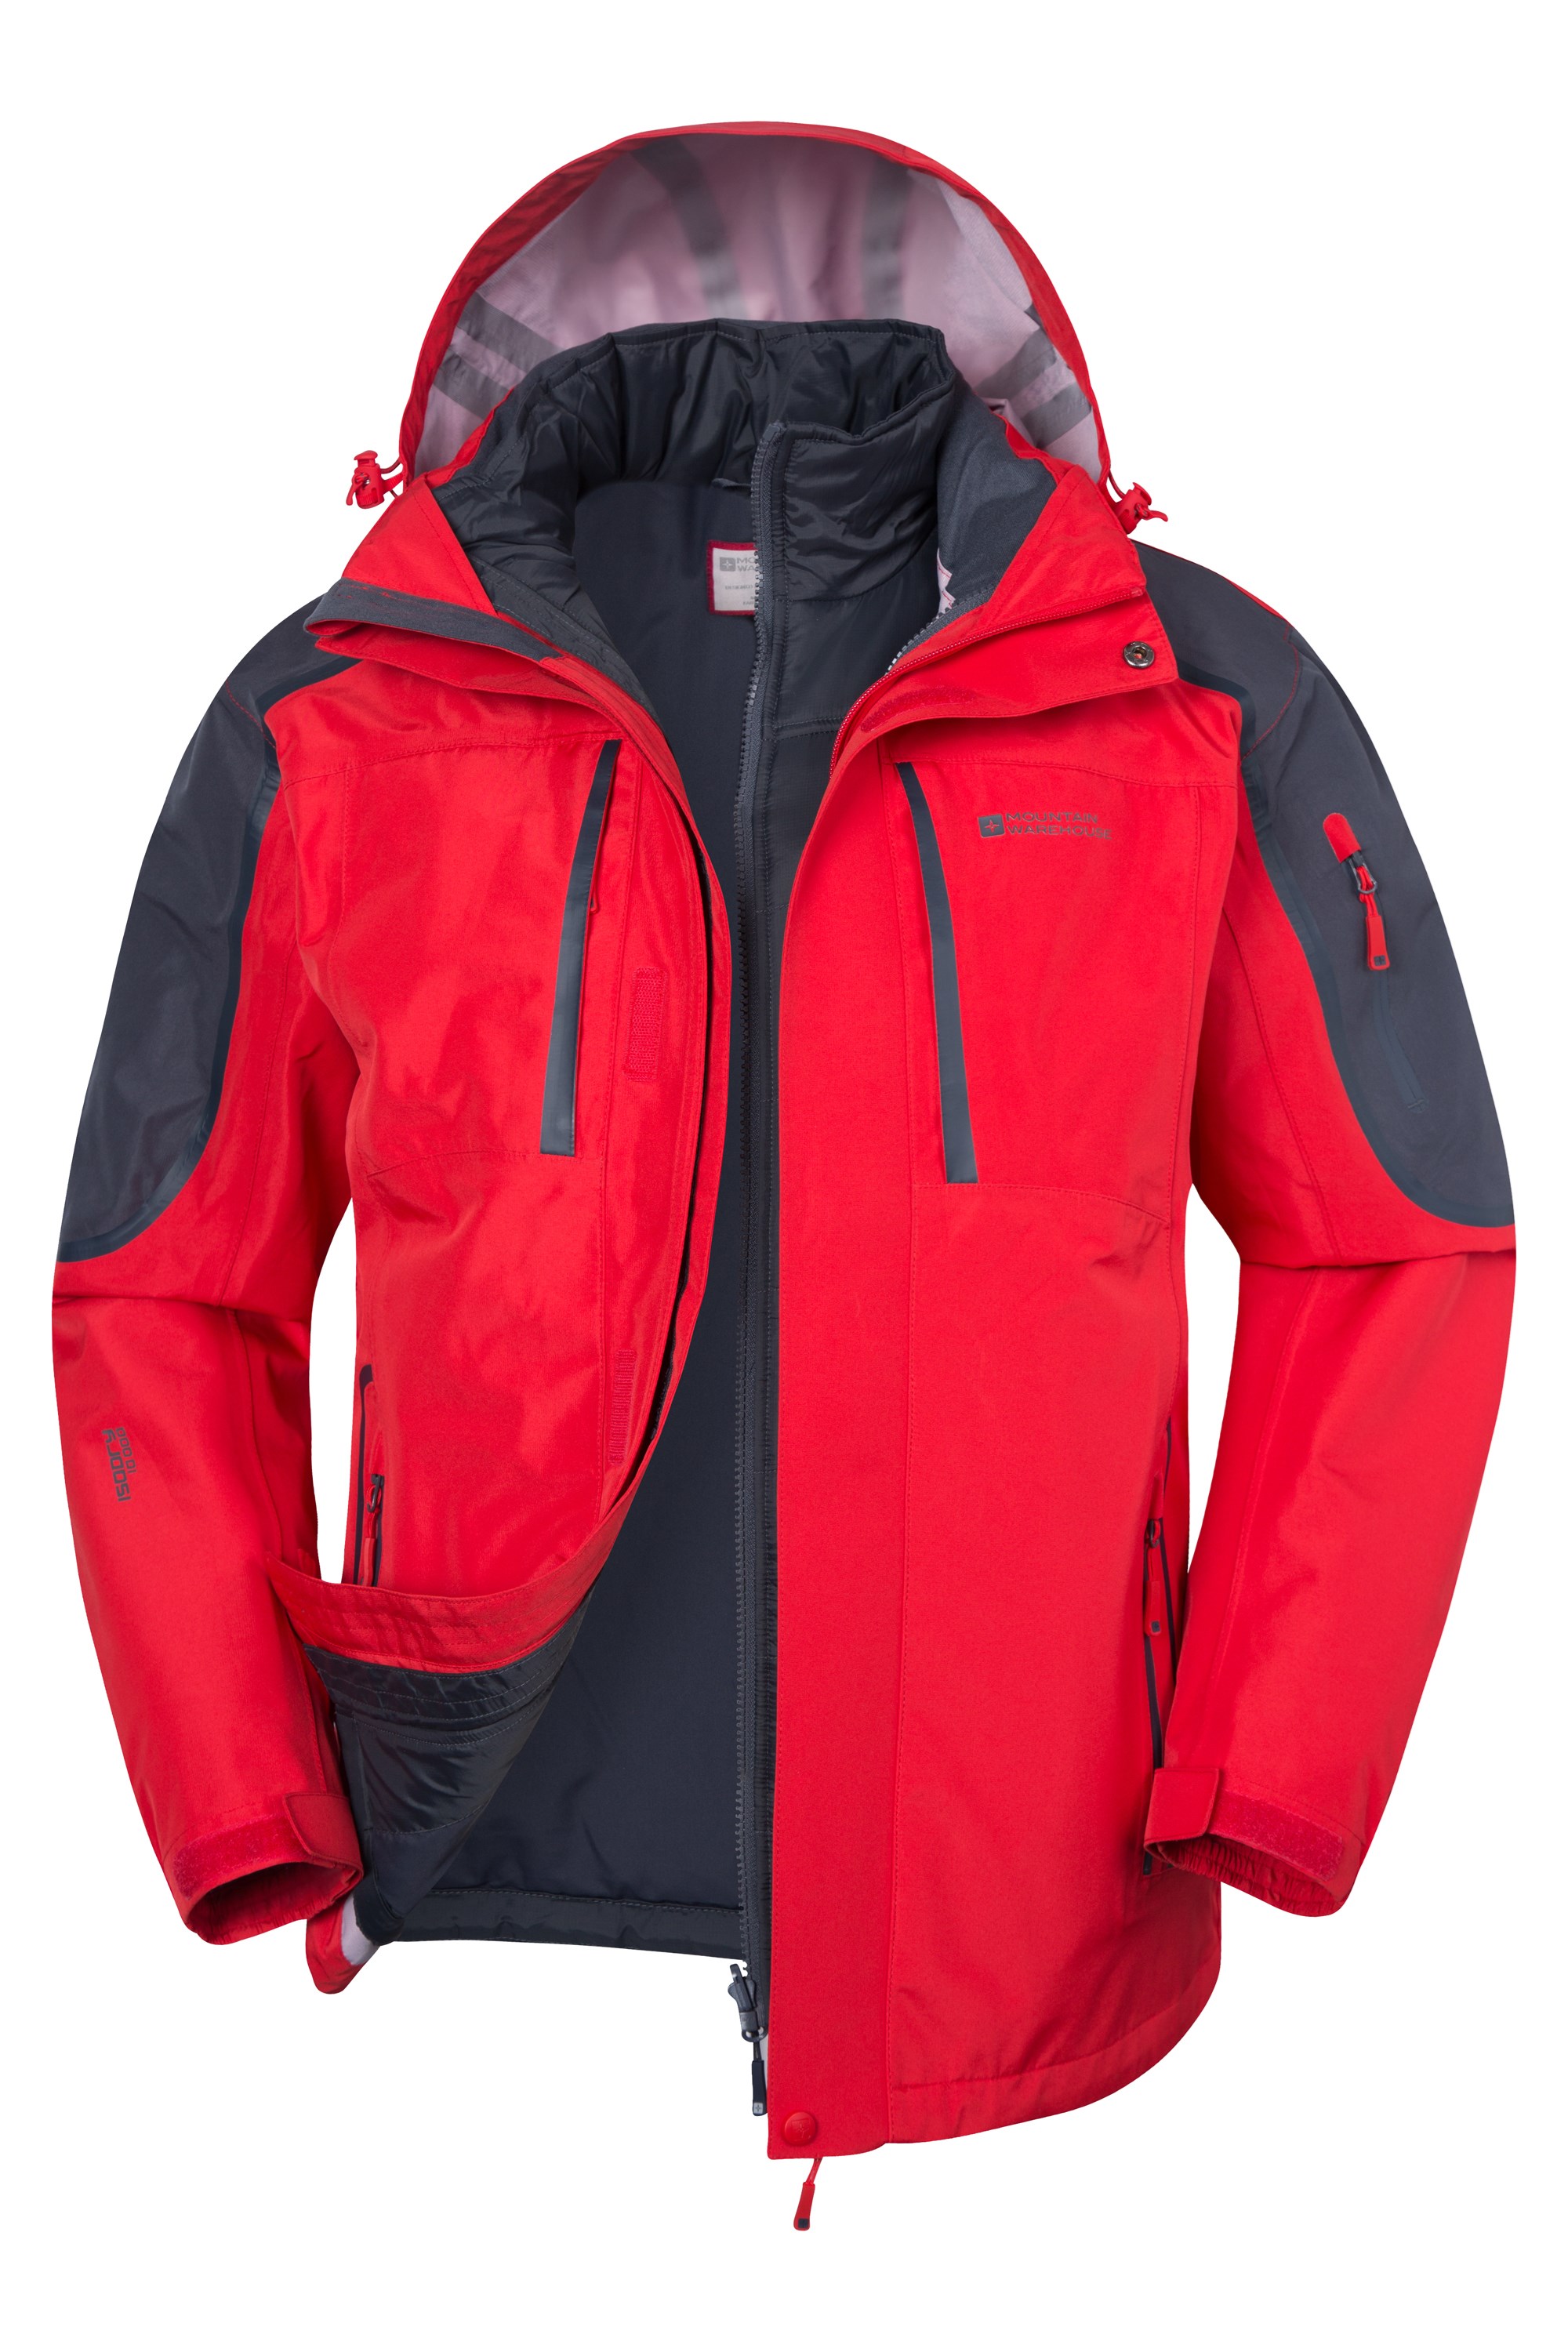 Mountain Warehouse Zenith Extreme Mens 3 in 1 Waterproof Jacket | eBay